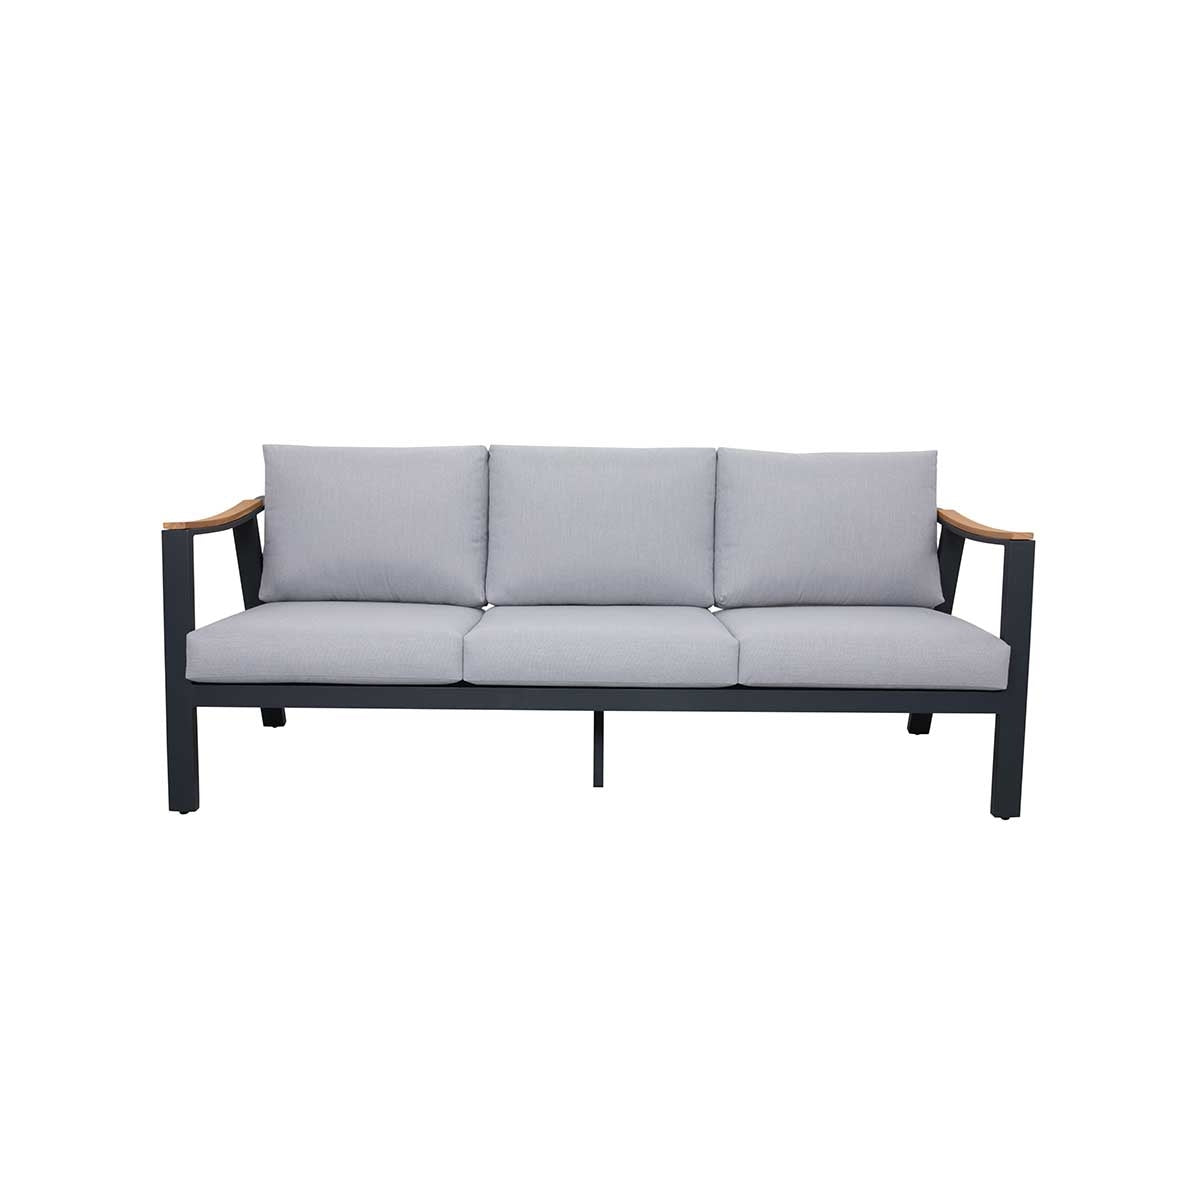 Patio Time Nova 4-Piece Aluminum & Teak Sofa Set with Stationary Chairs